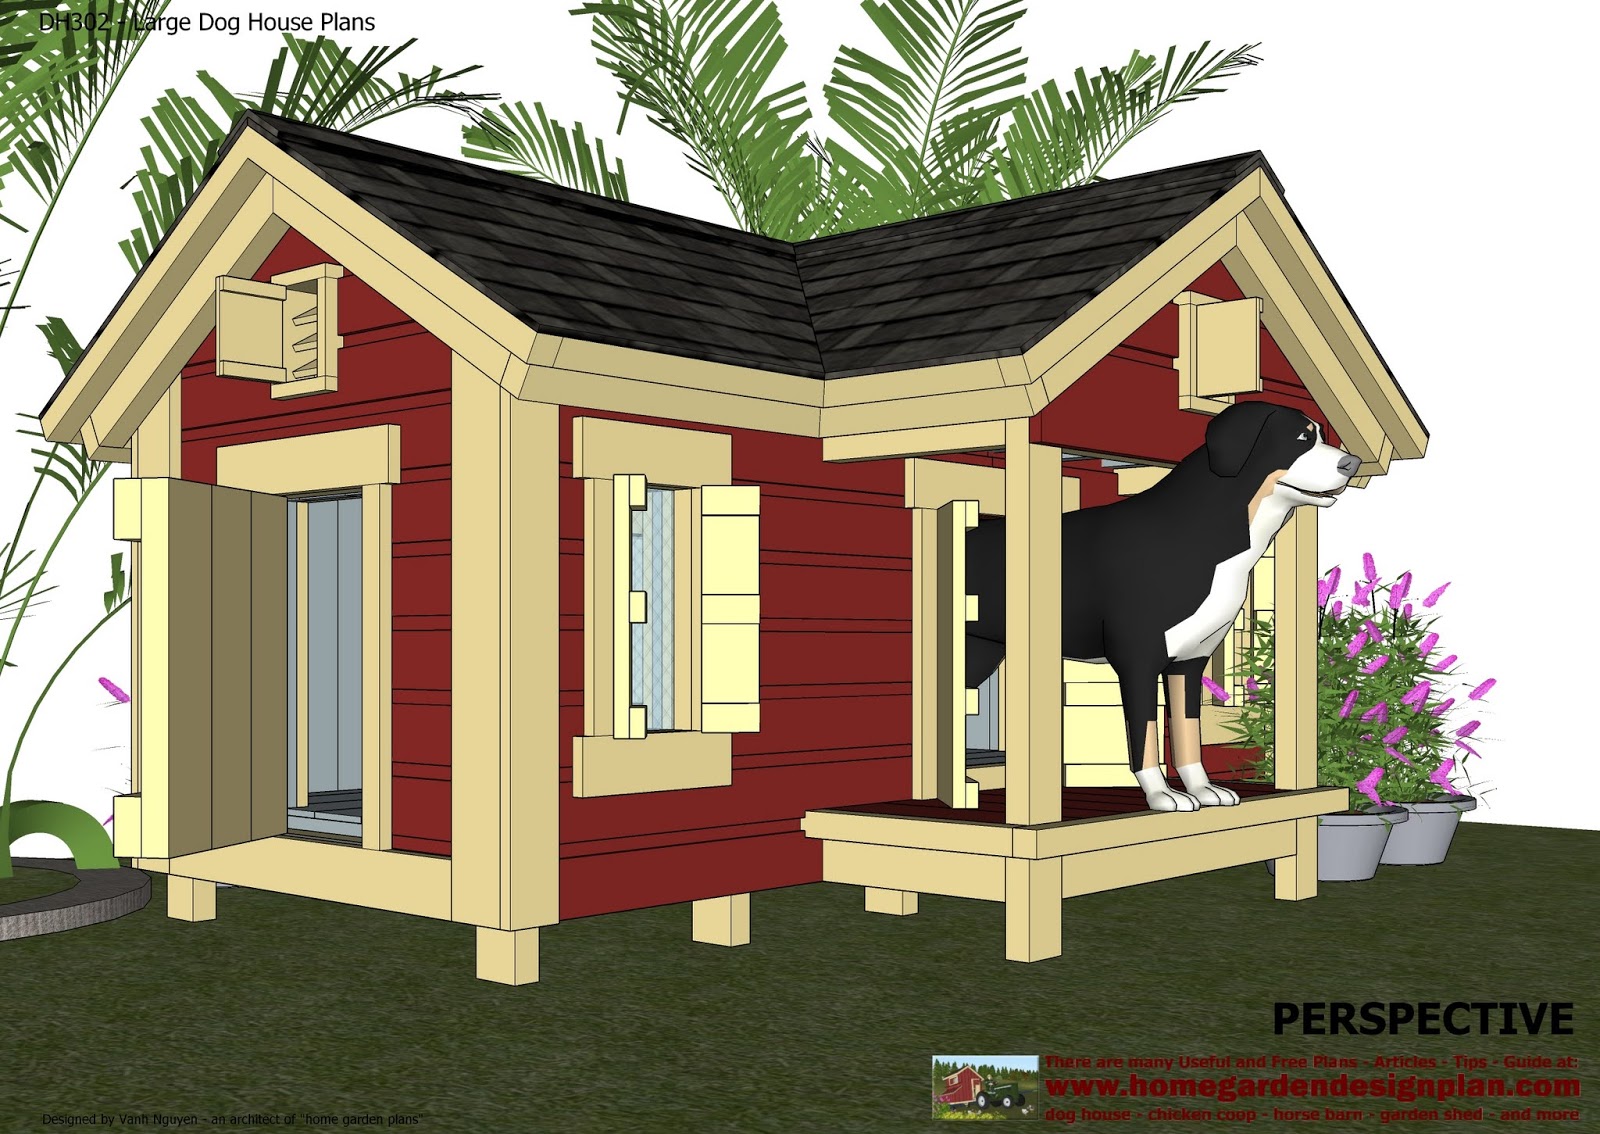  dog+house+plans+free+-+dog+house+design+free+-+Insulated+dog+house.jpg